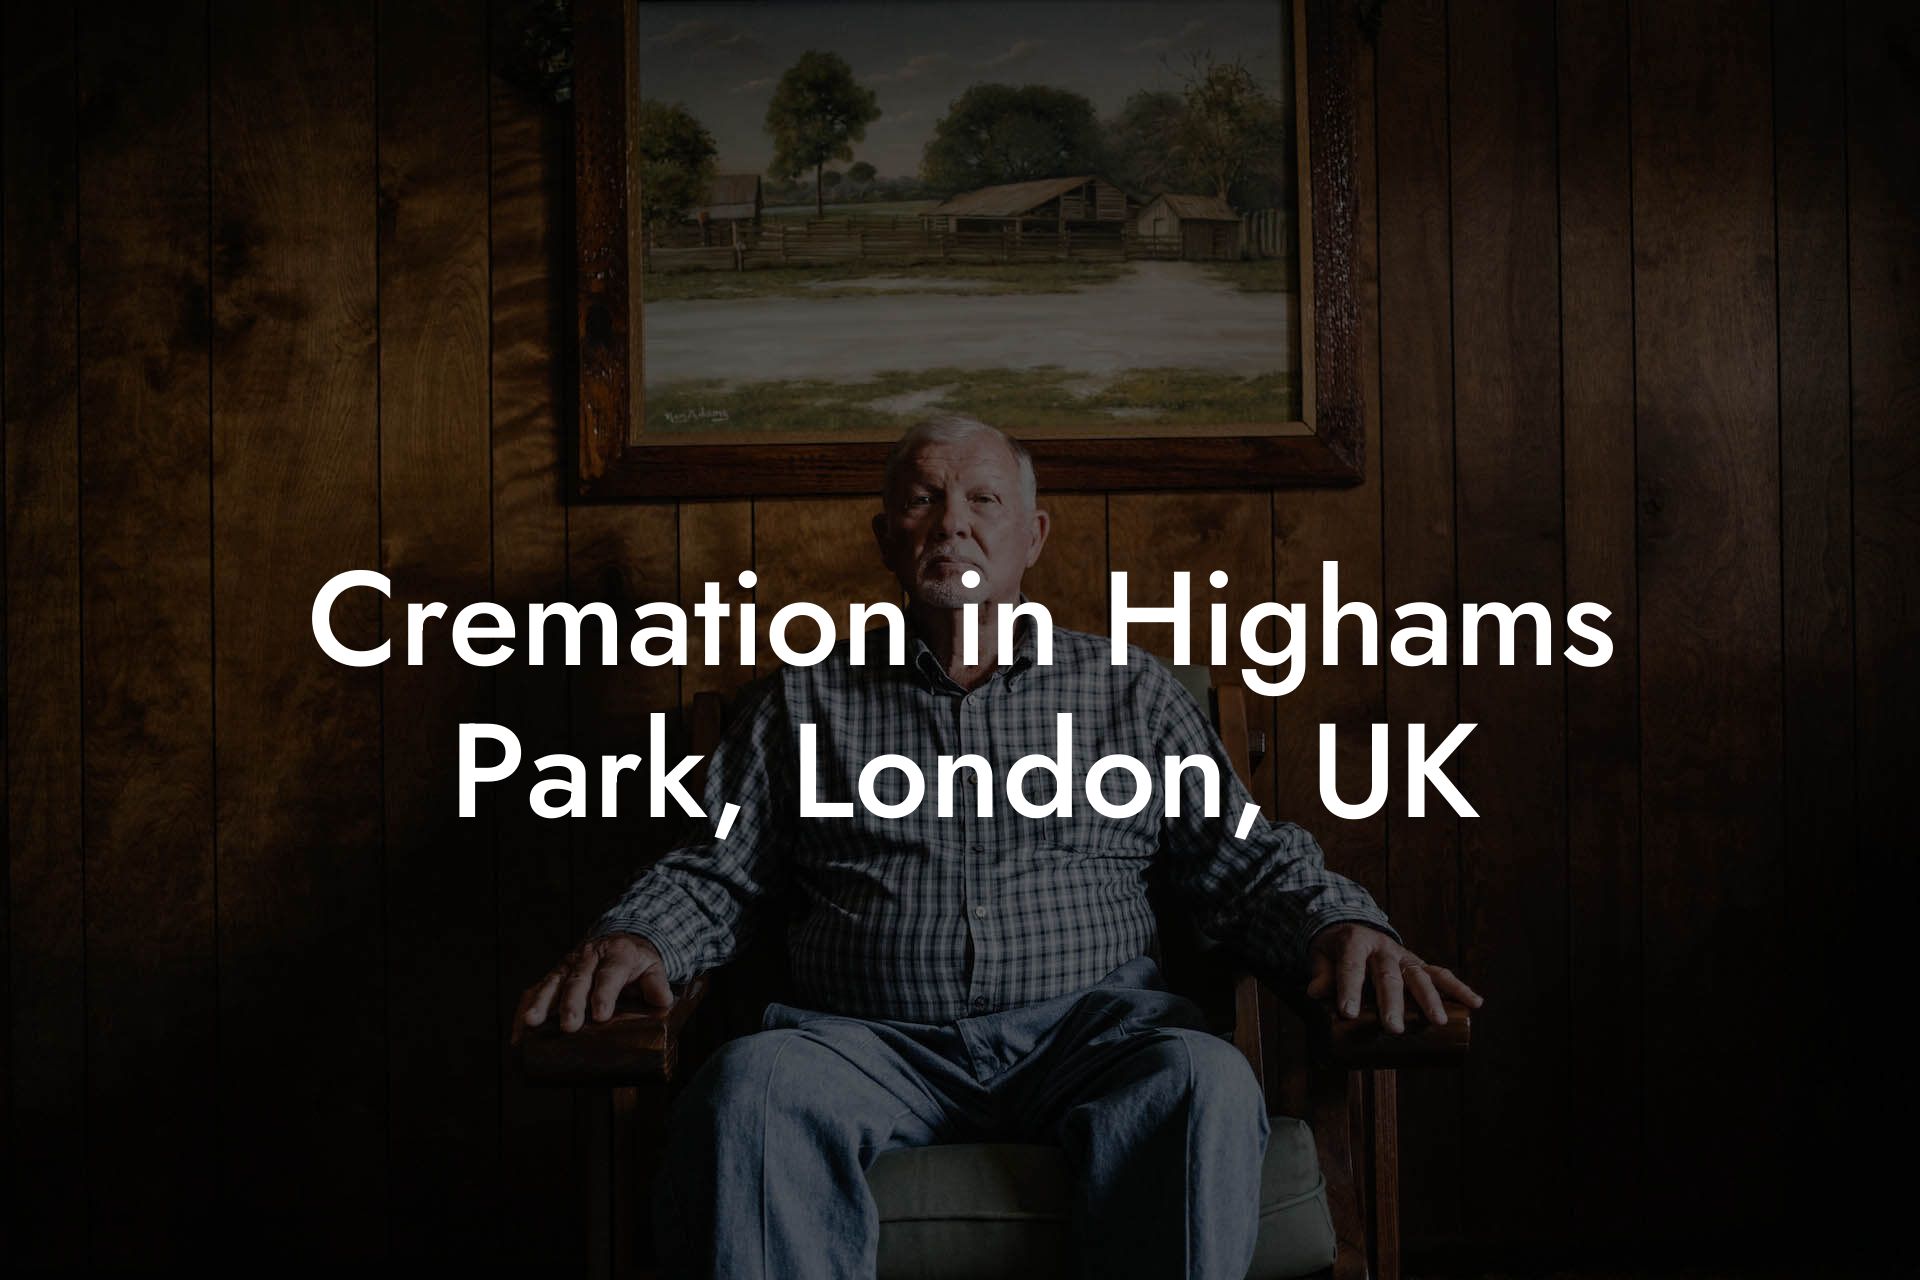 Cremation in Highams Park, London, UK